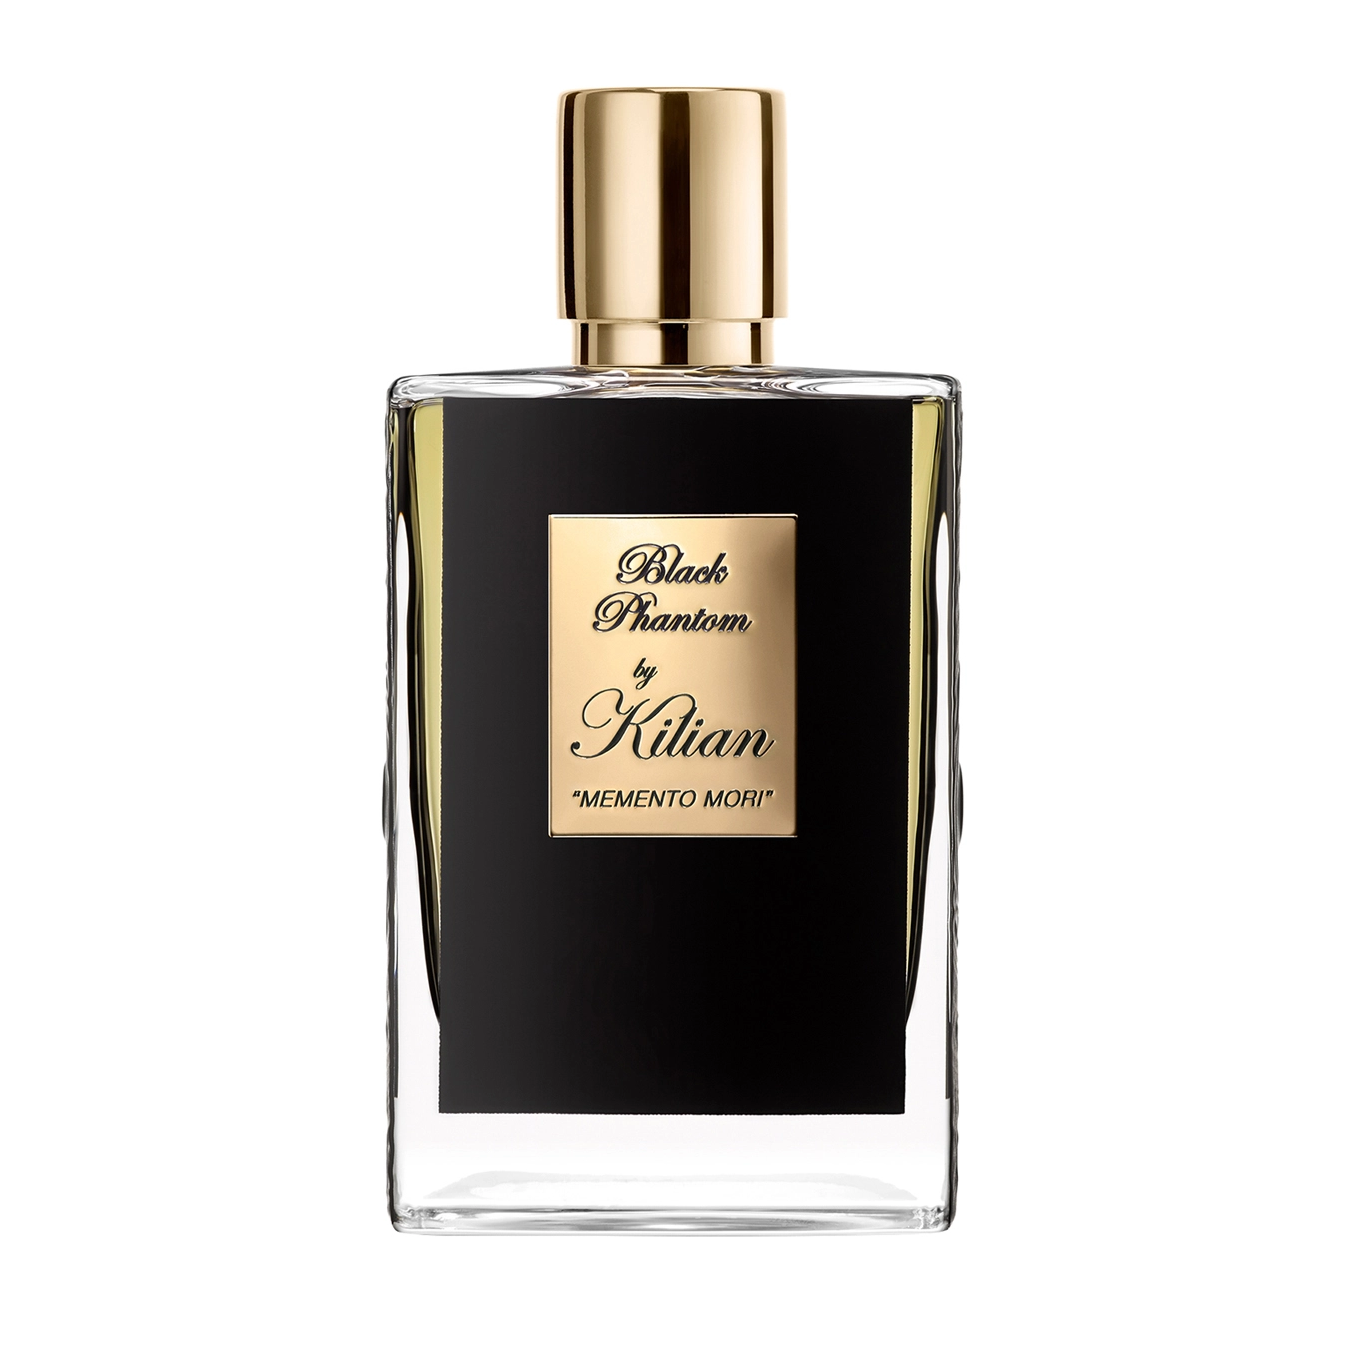 Kilian Black Phantom Eau De Parfum Spray 50ml - Feel Gorgeous